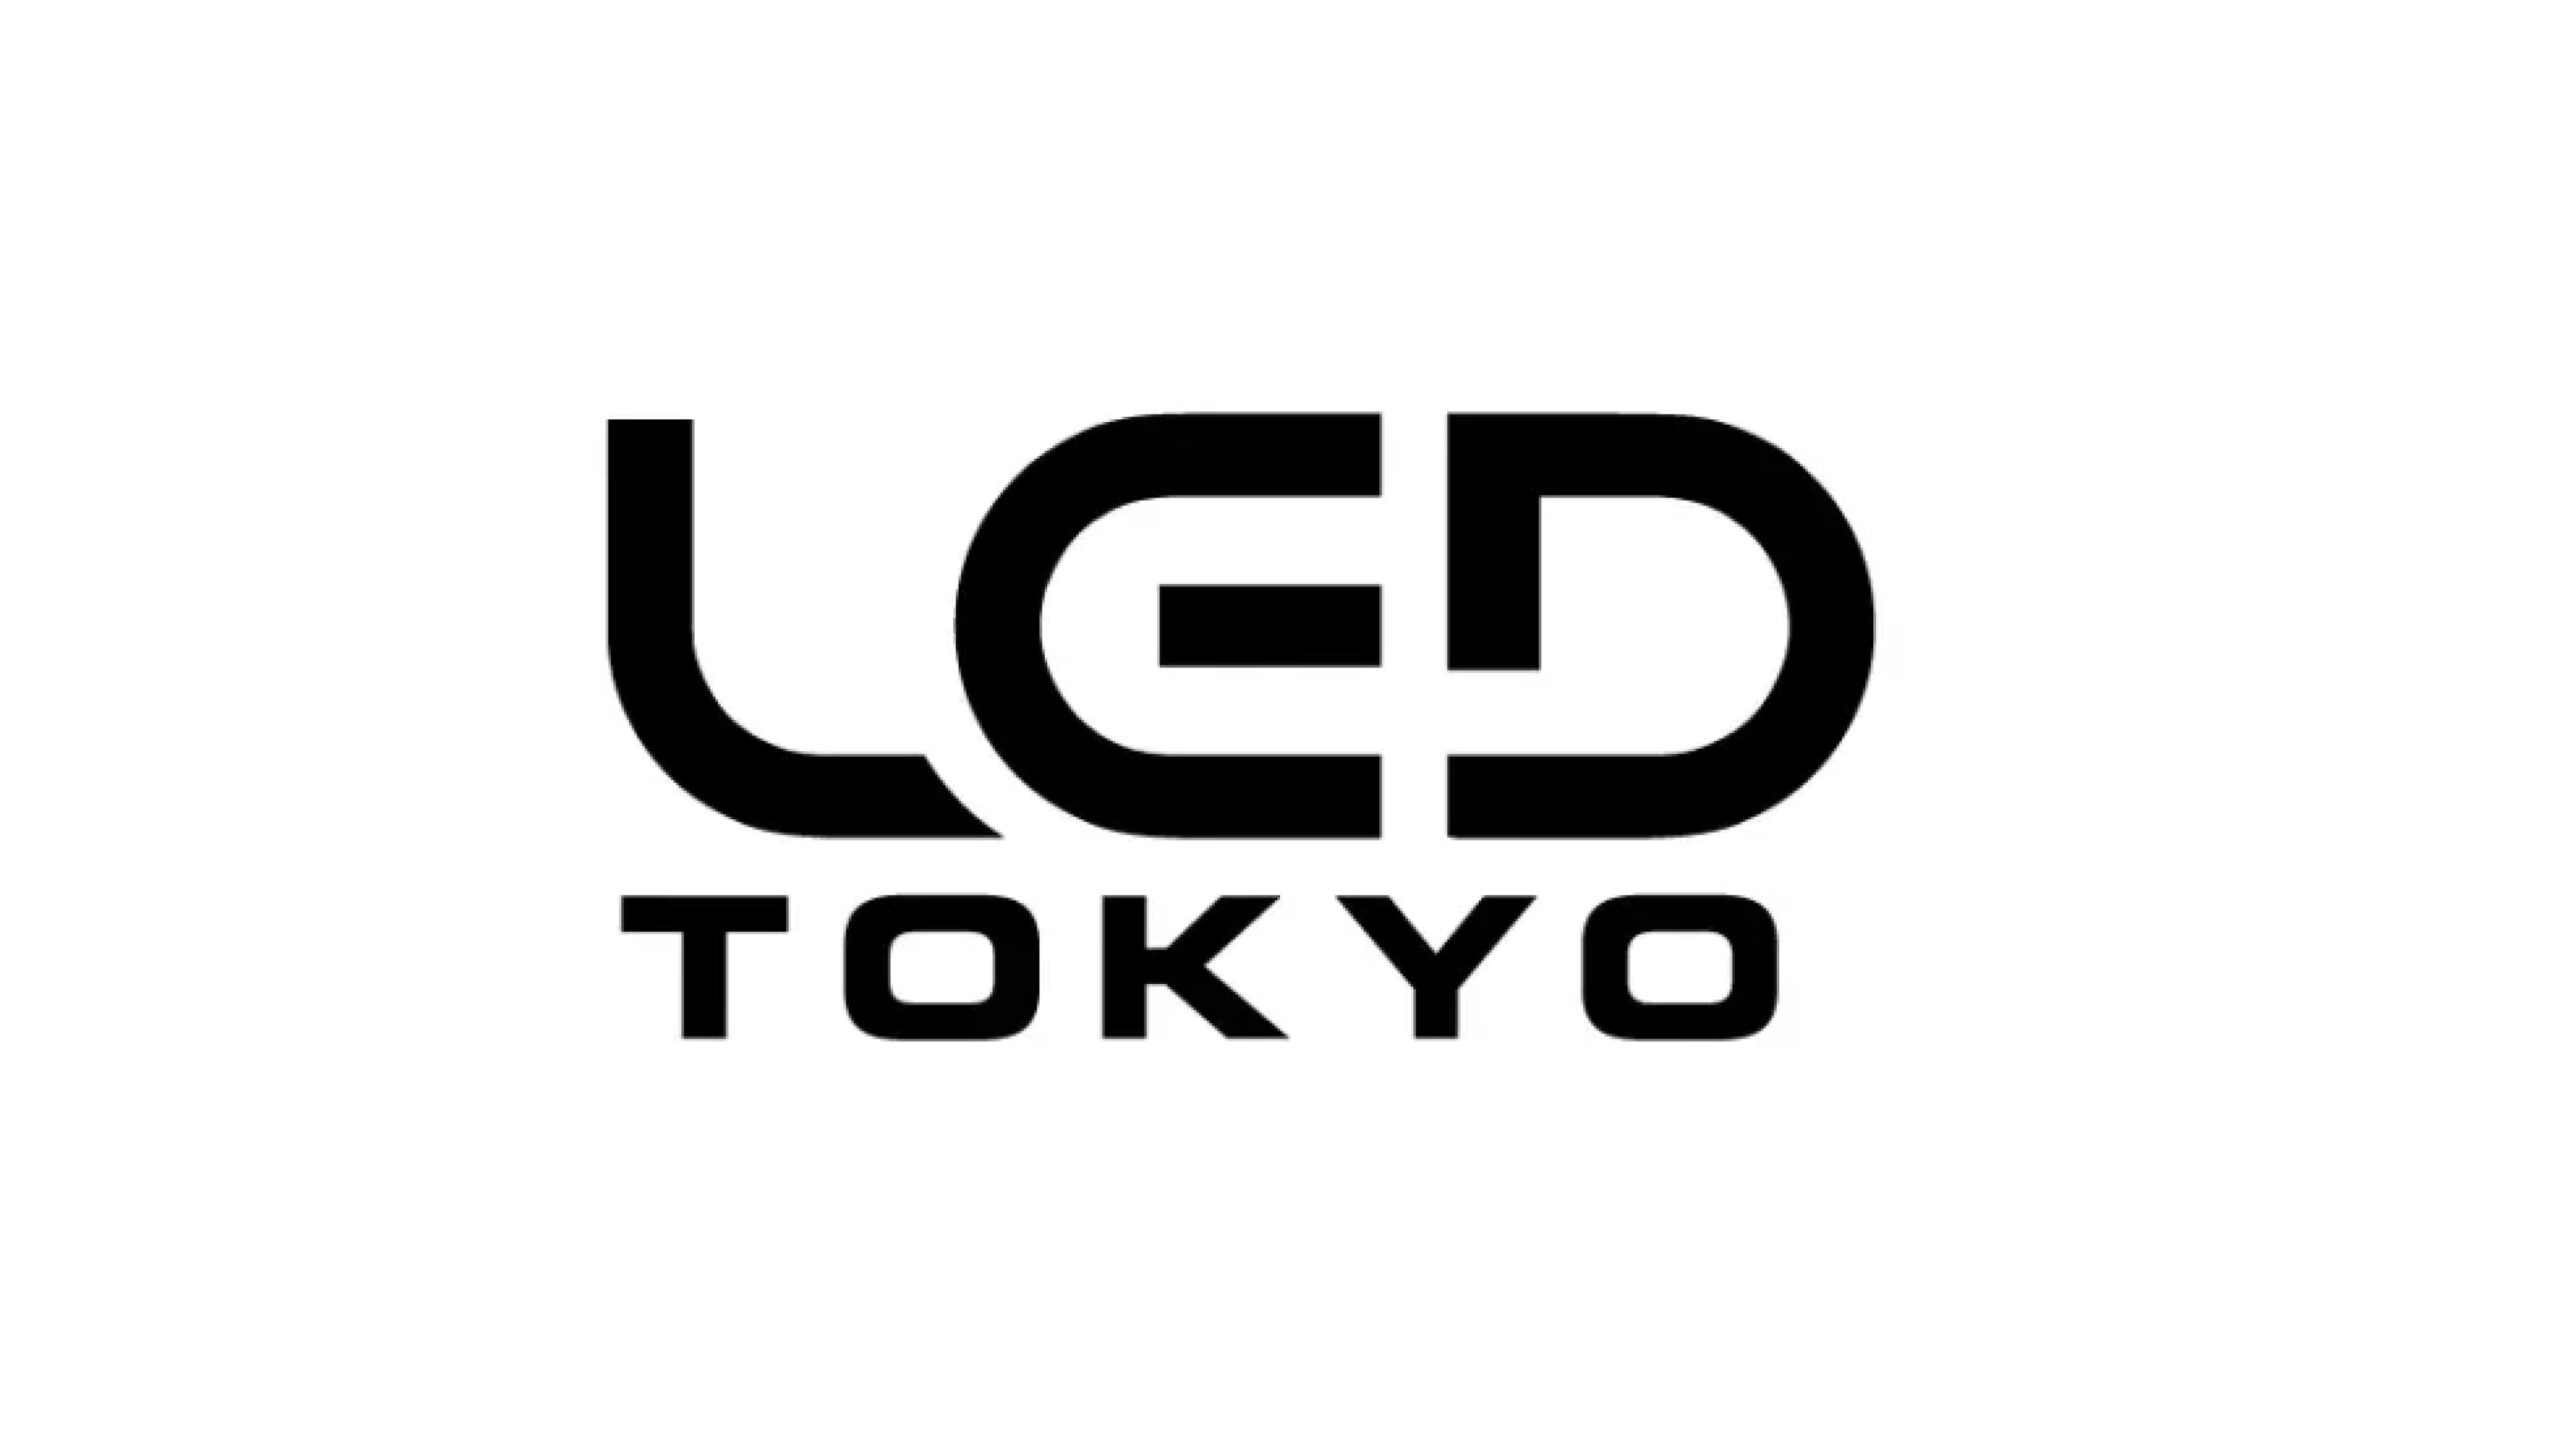 LED TOKYO、本田圭佑率いるKSK Angel Fundからの資金調達とアドバイザー契約締結を発表――デジタルサイネージ市場への影響が期待